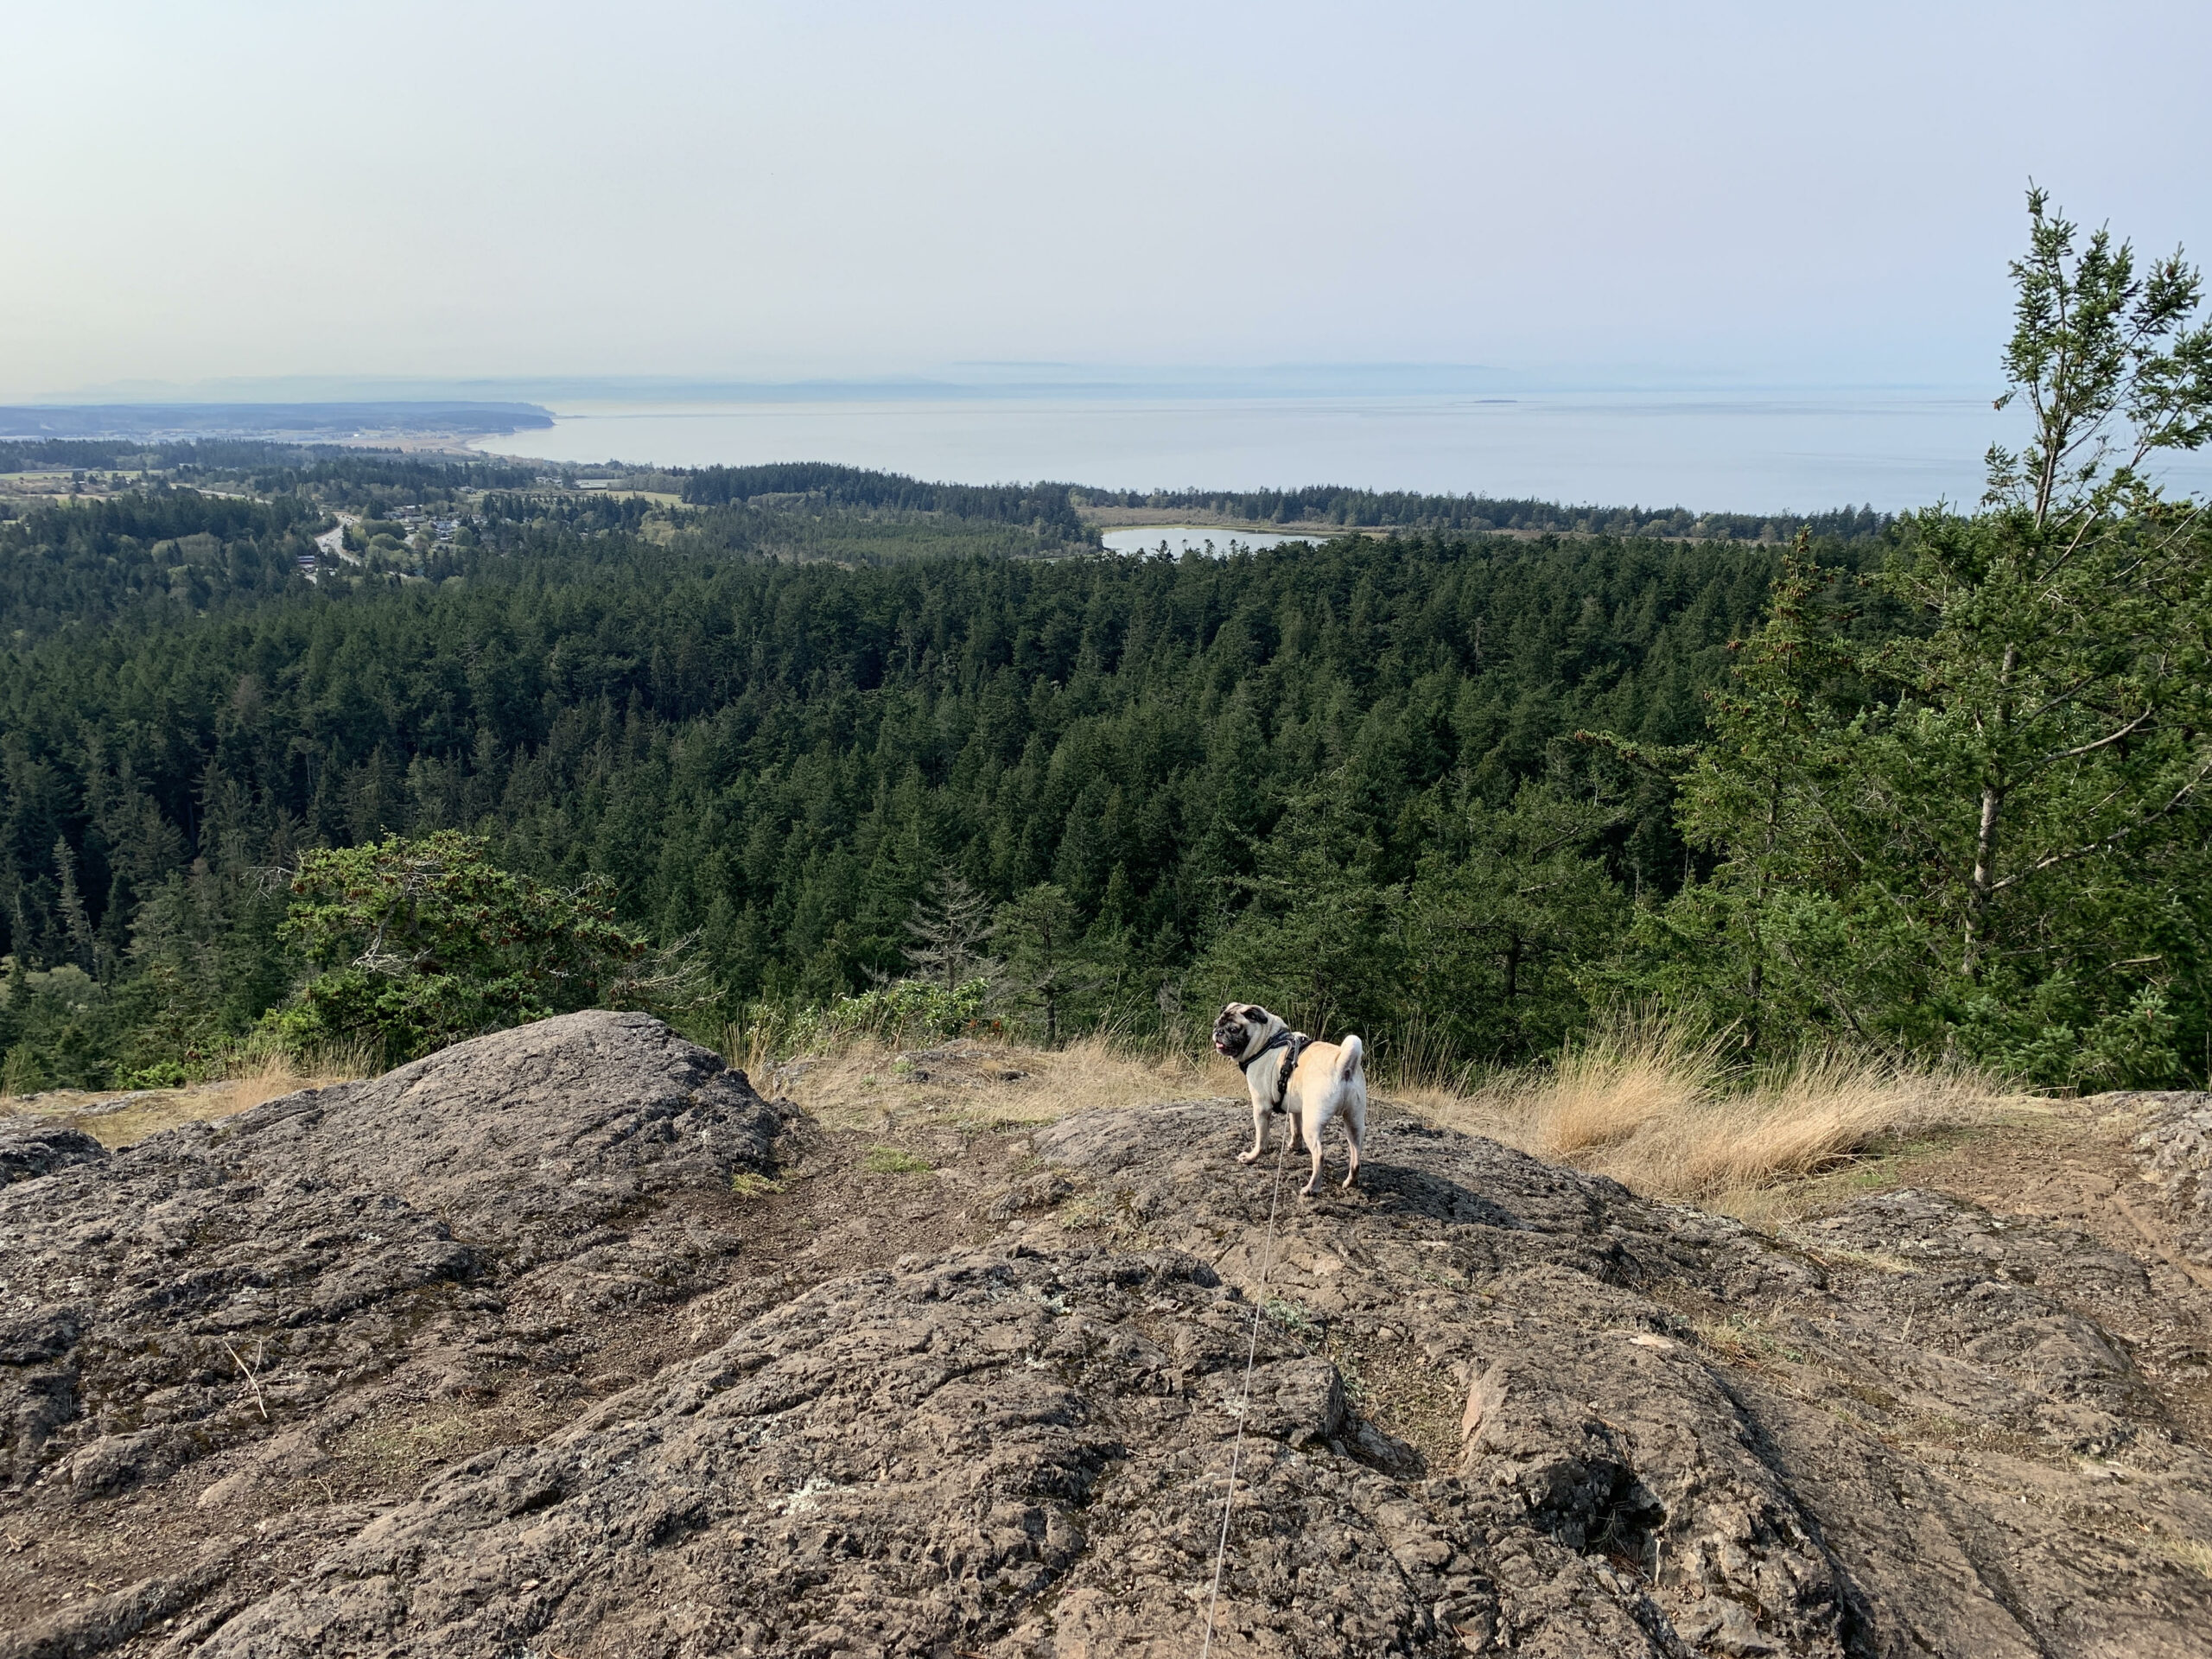 Pug on Cliffside overlooking the Sea Washington State